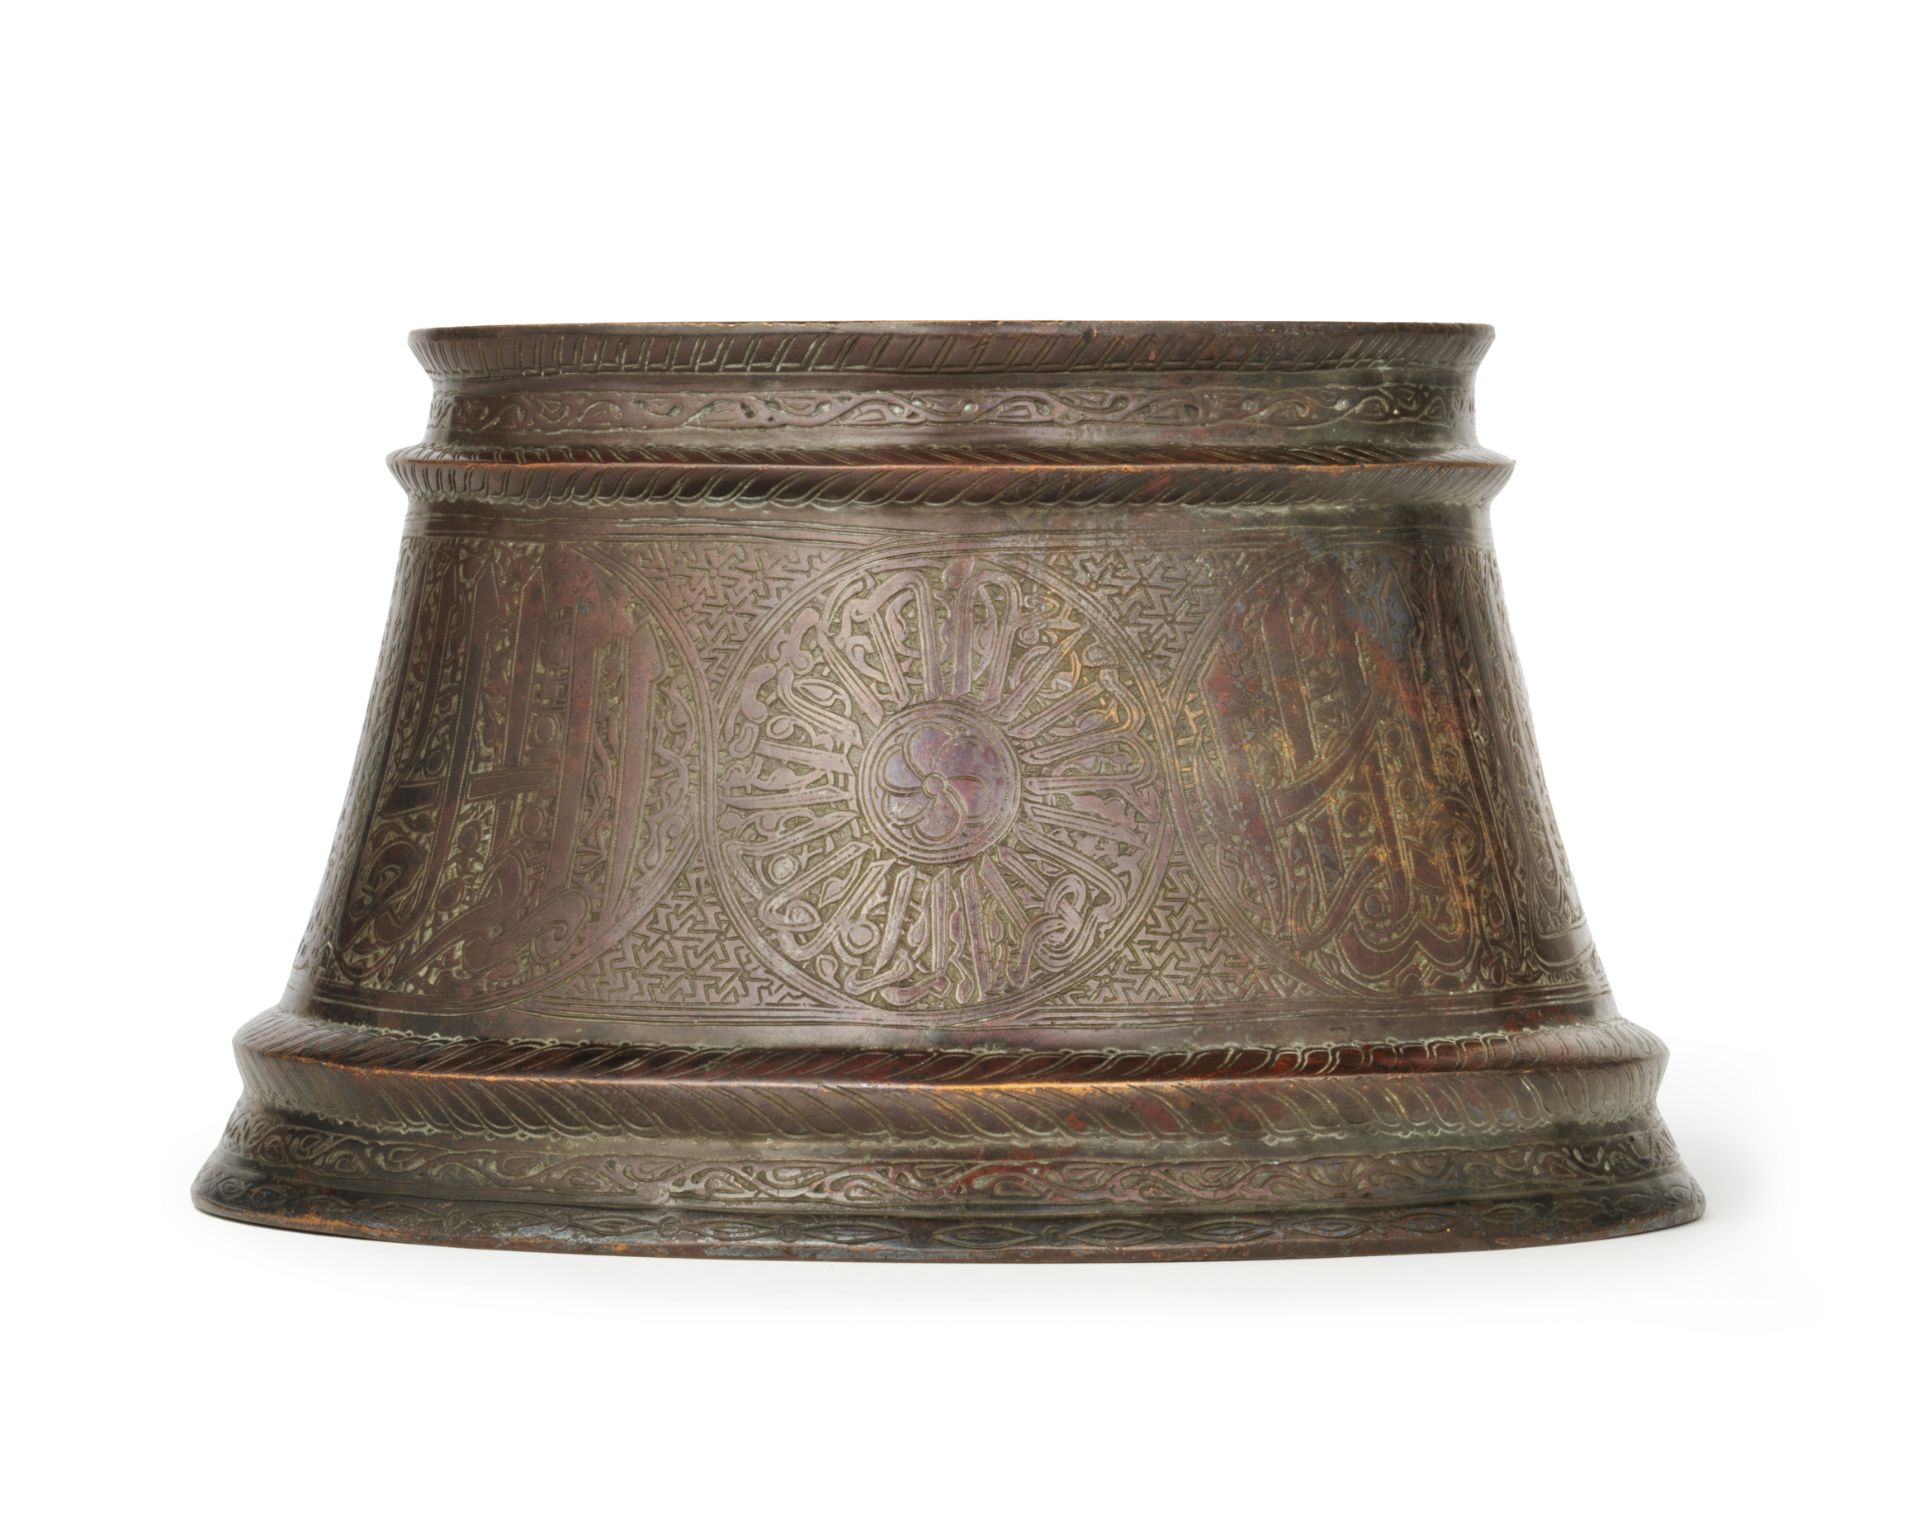 A Mamluk silver-inlaid bronze candlestick base Egypt or Syria, 14th Century